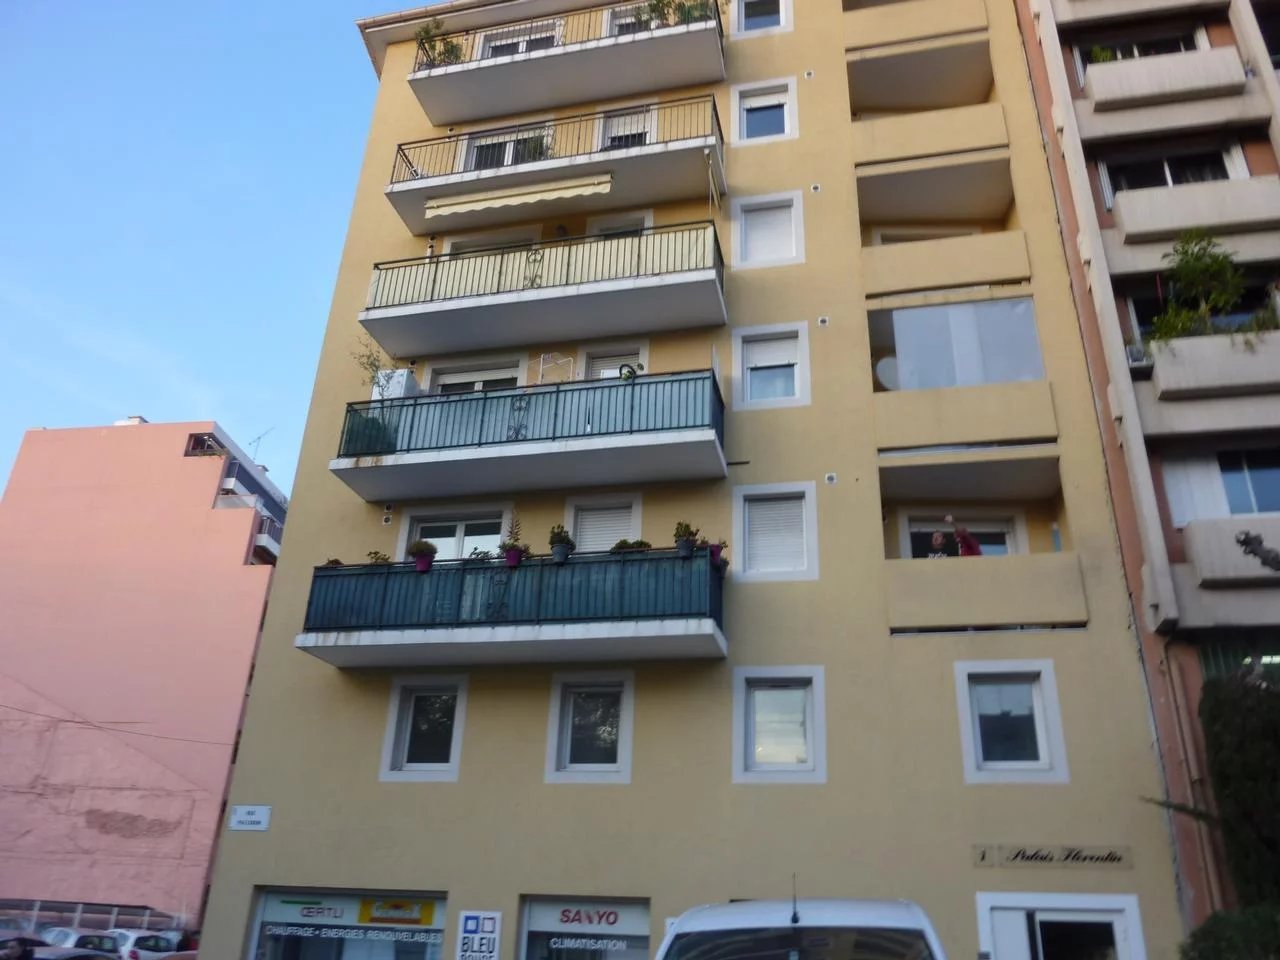 Appartement  1 Locali 22m2  In vendita   109 000 €